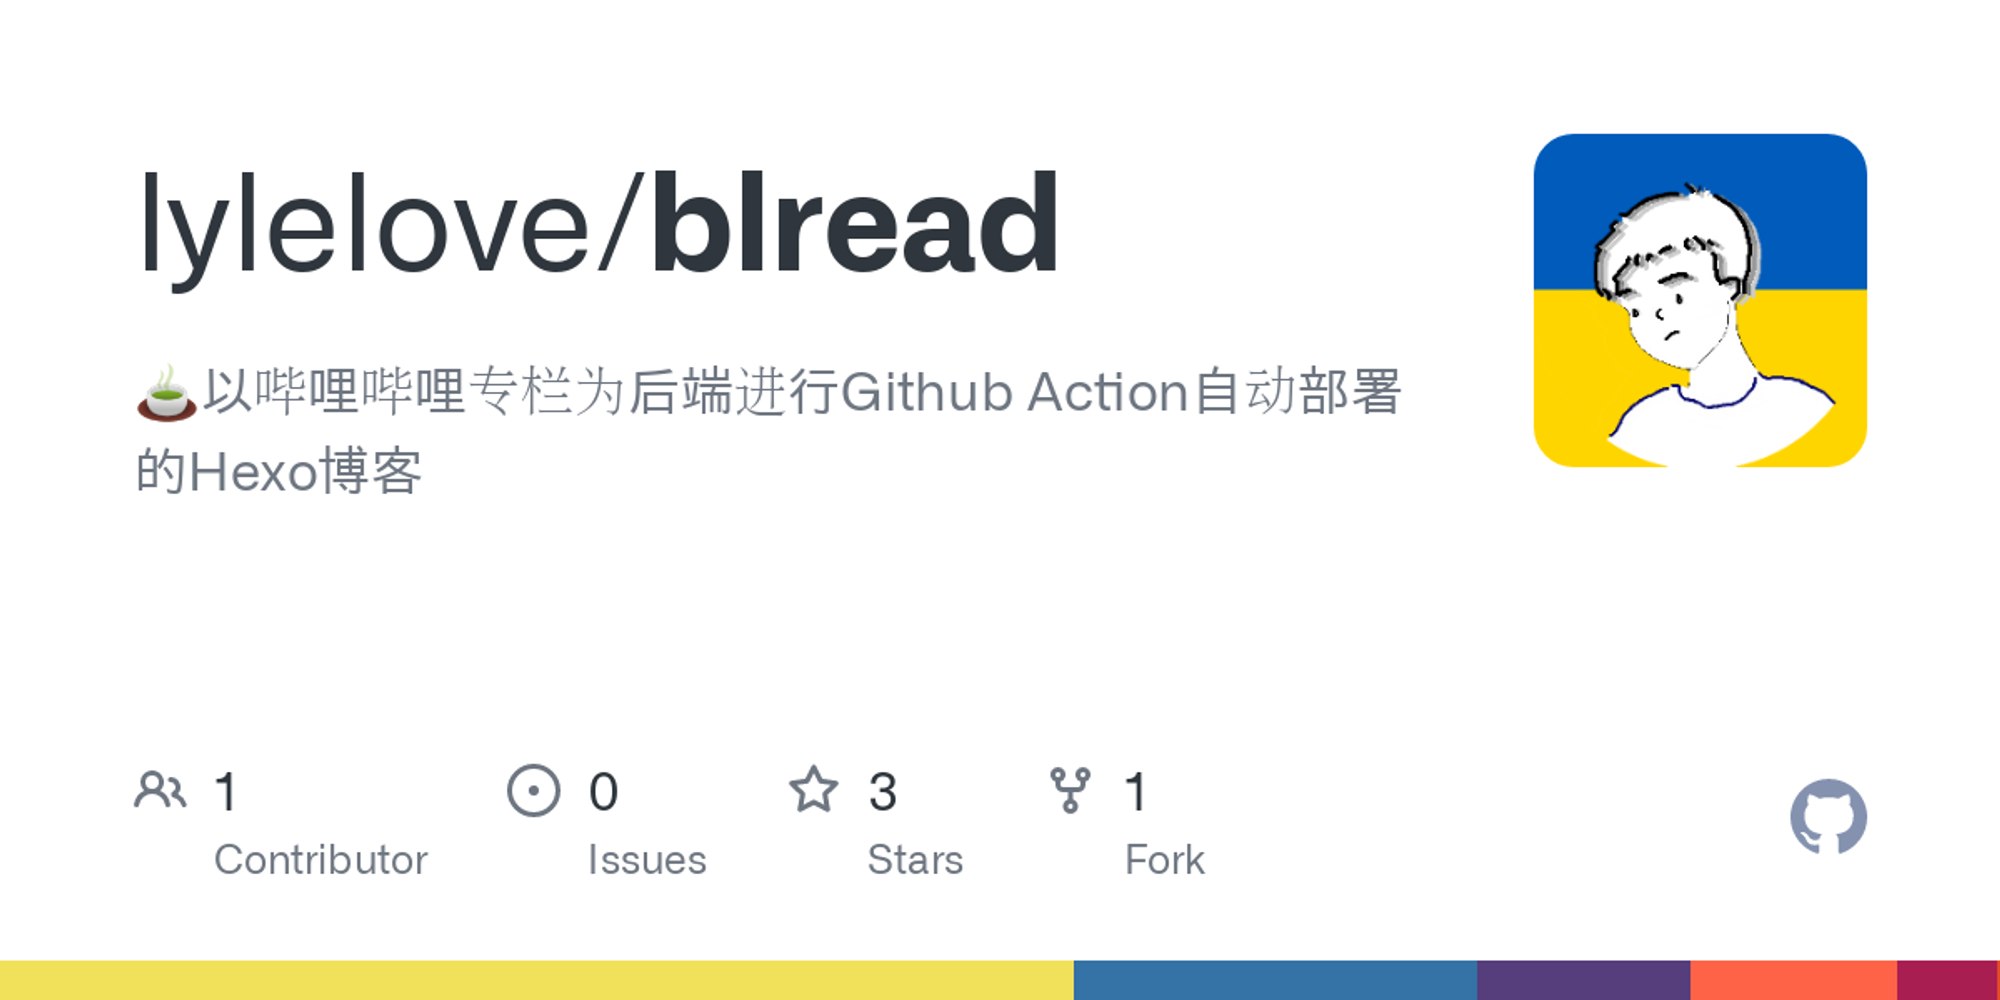 GitHub - lylelove/blread: 🍵以哔哩哔哩专栏为后端进行Github Action自动部署的Hexo博客